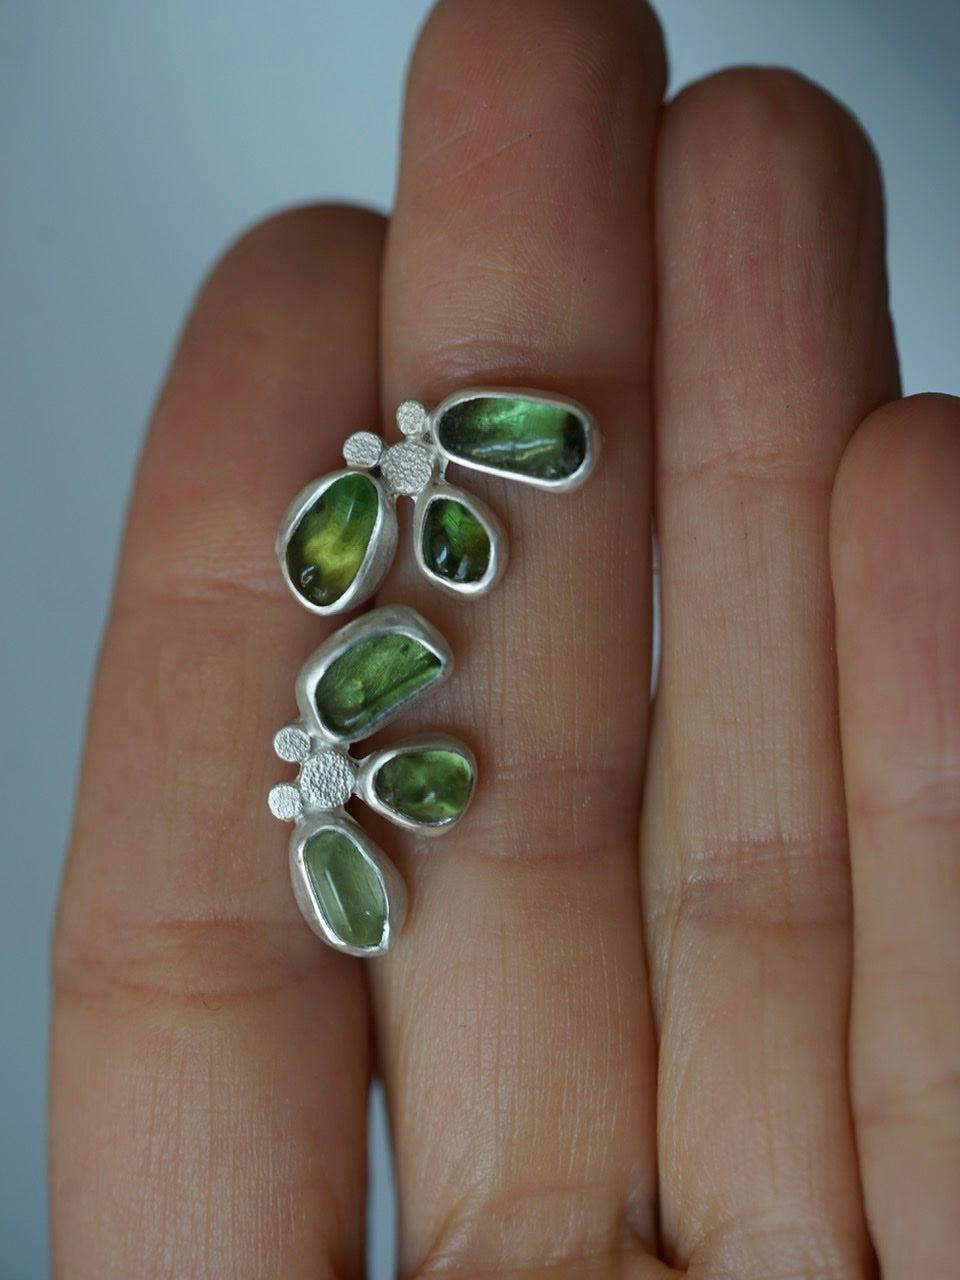 Green botanical tourmaline earrings